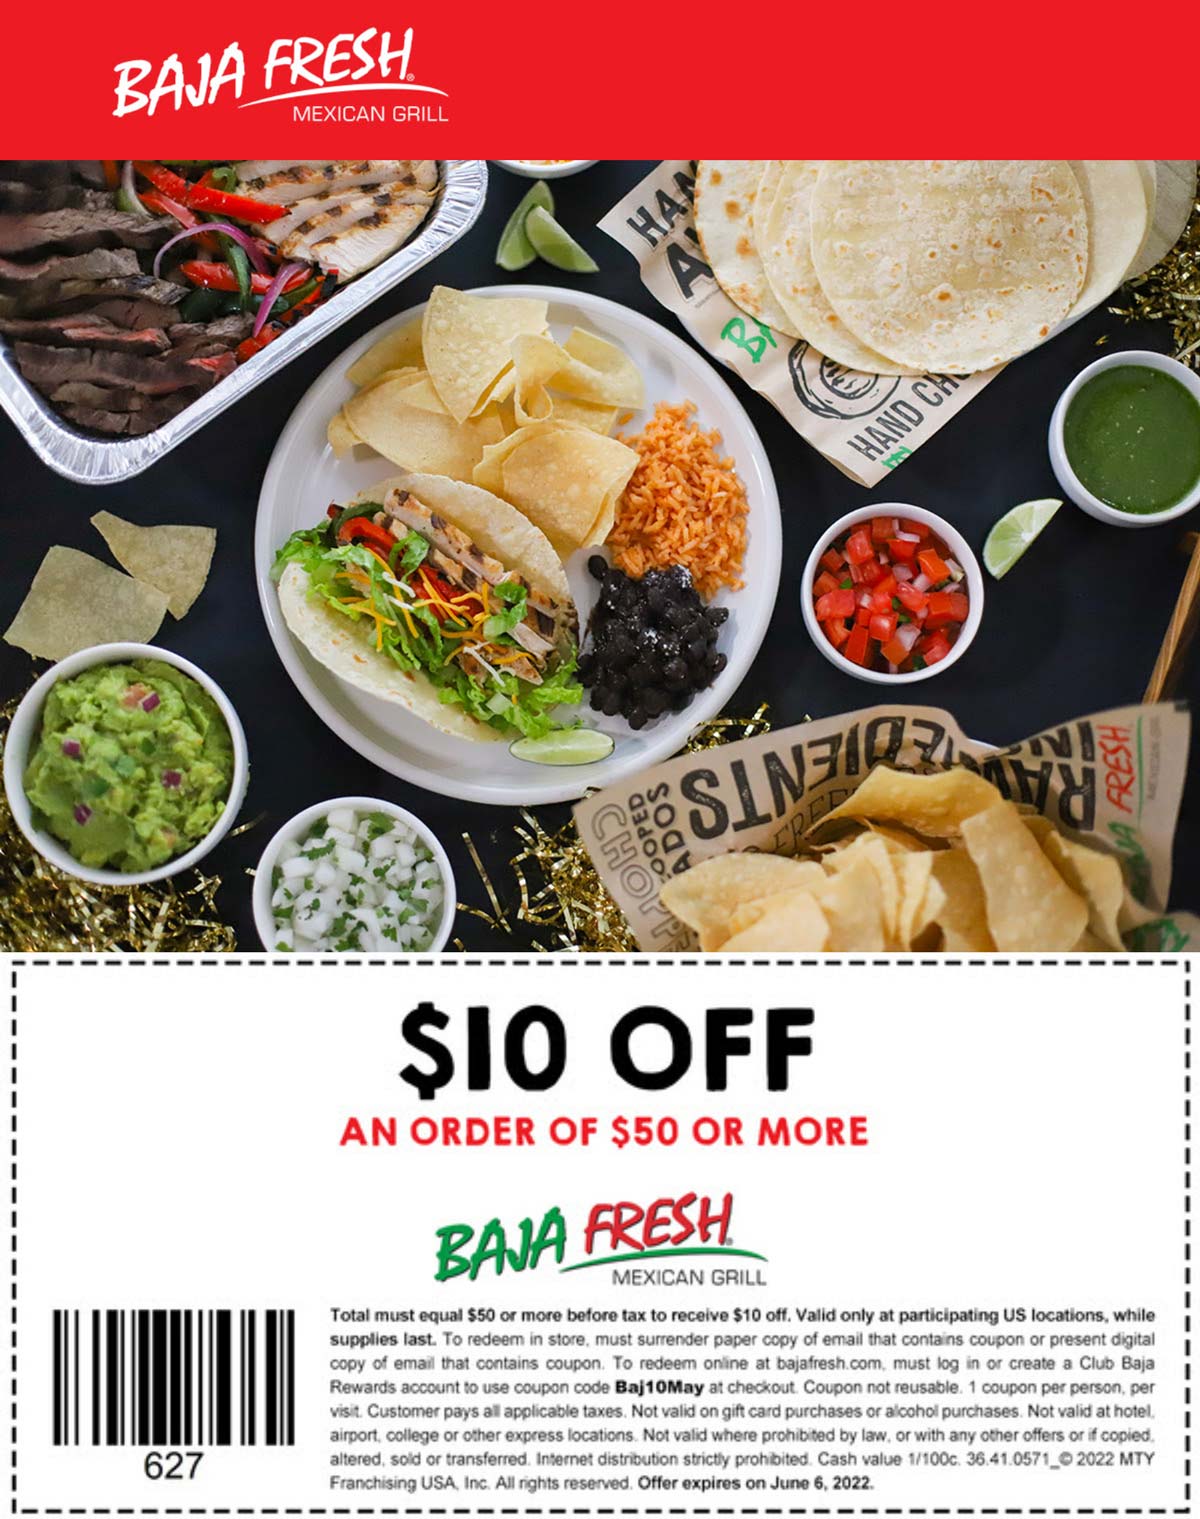 Baja Fresh restaurants Coupon  $10 off $50 at Baja Fresh Mexican grill, or online via promo code Baj10May #bajafresh 